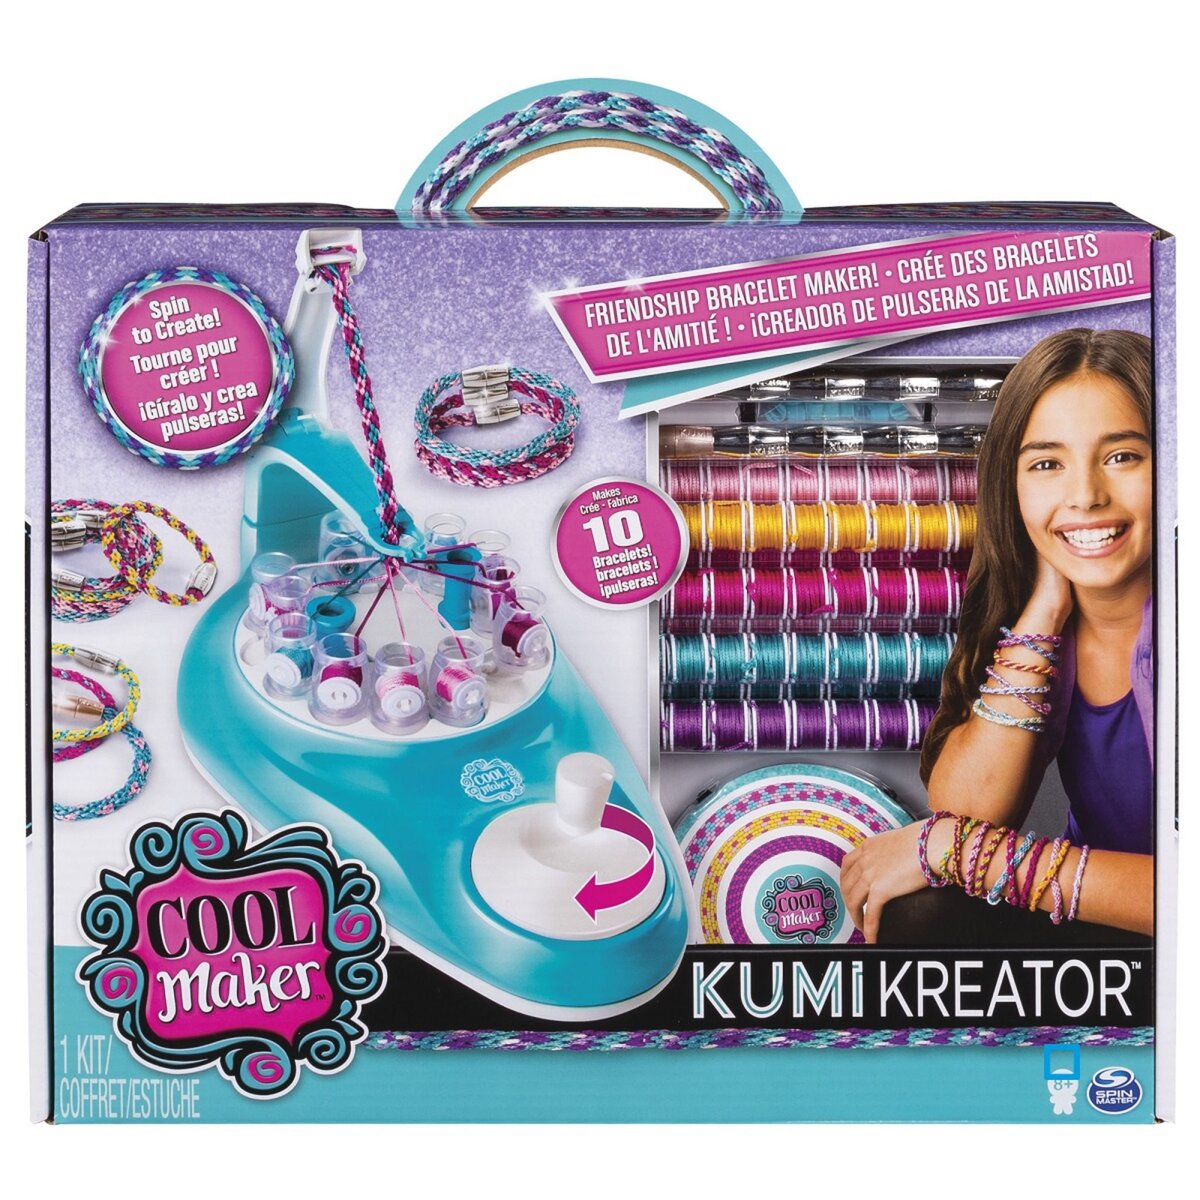 SPIN MASTER Cool maker kumi kreator 